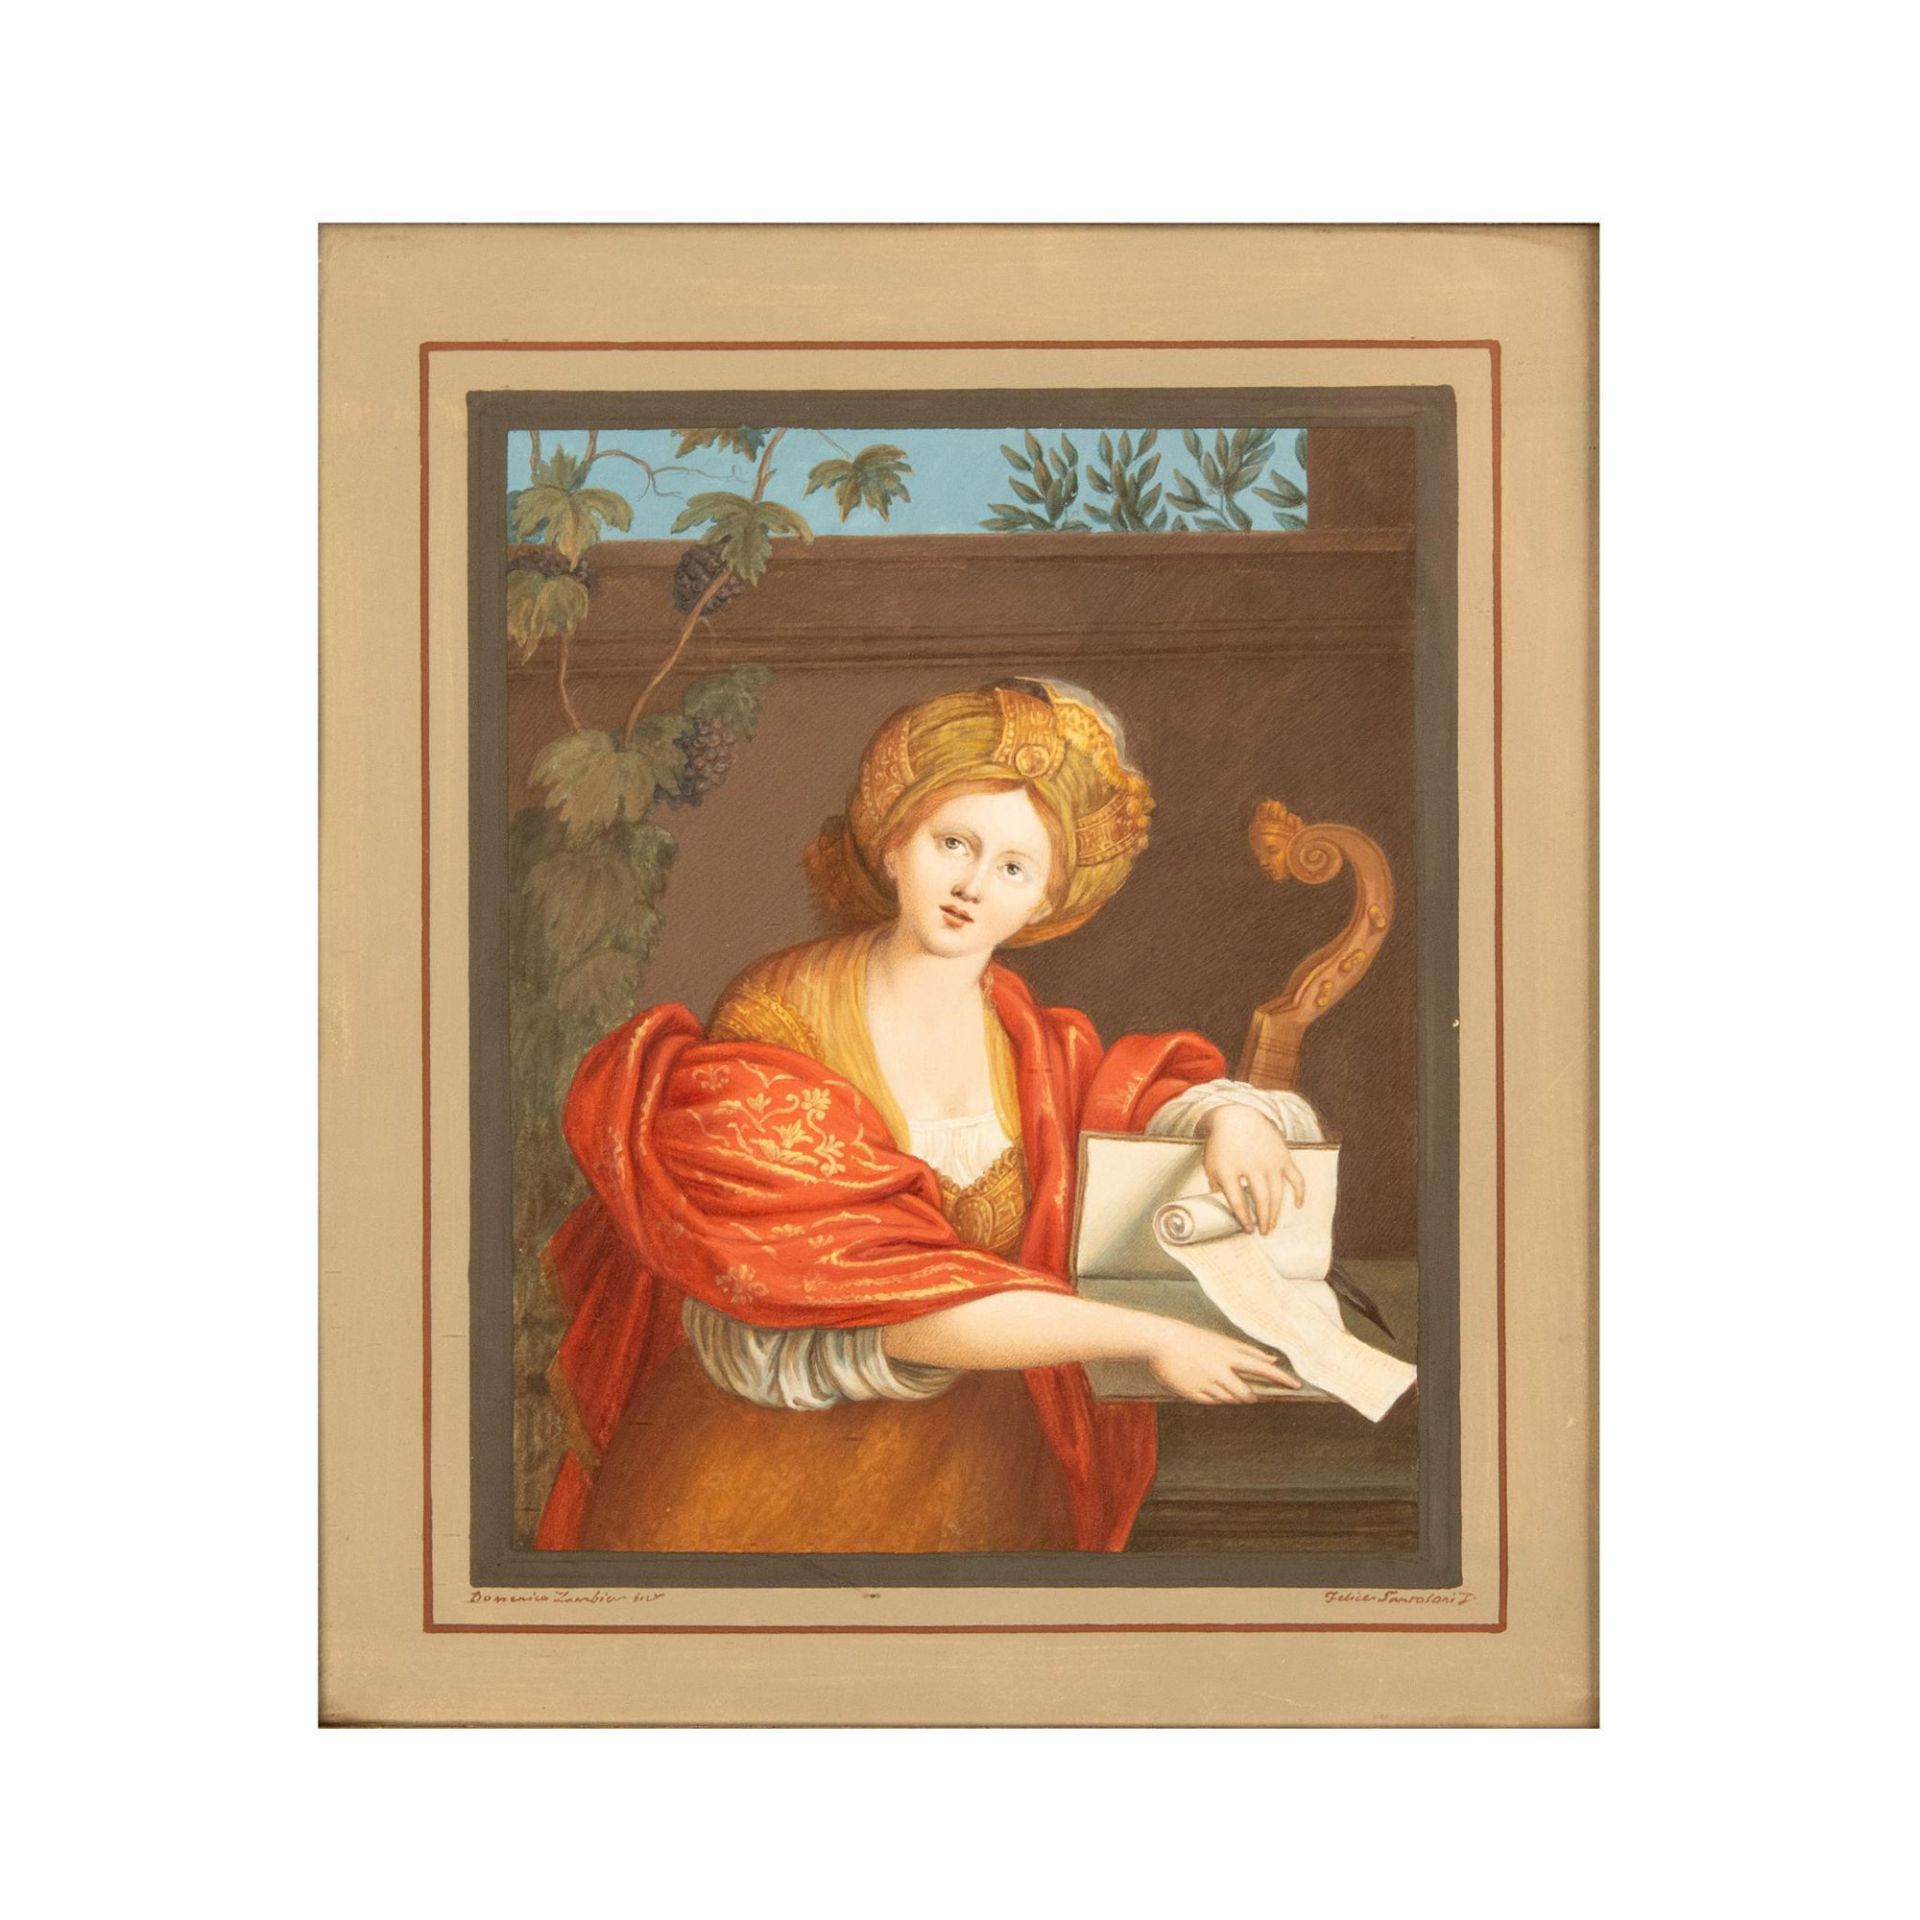 Felice Santoloni after Domenichino, Original Watercolor - Image 2 of 5